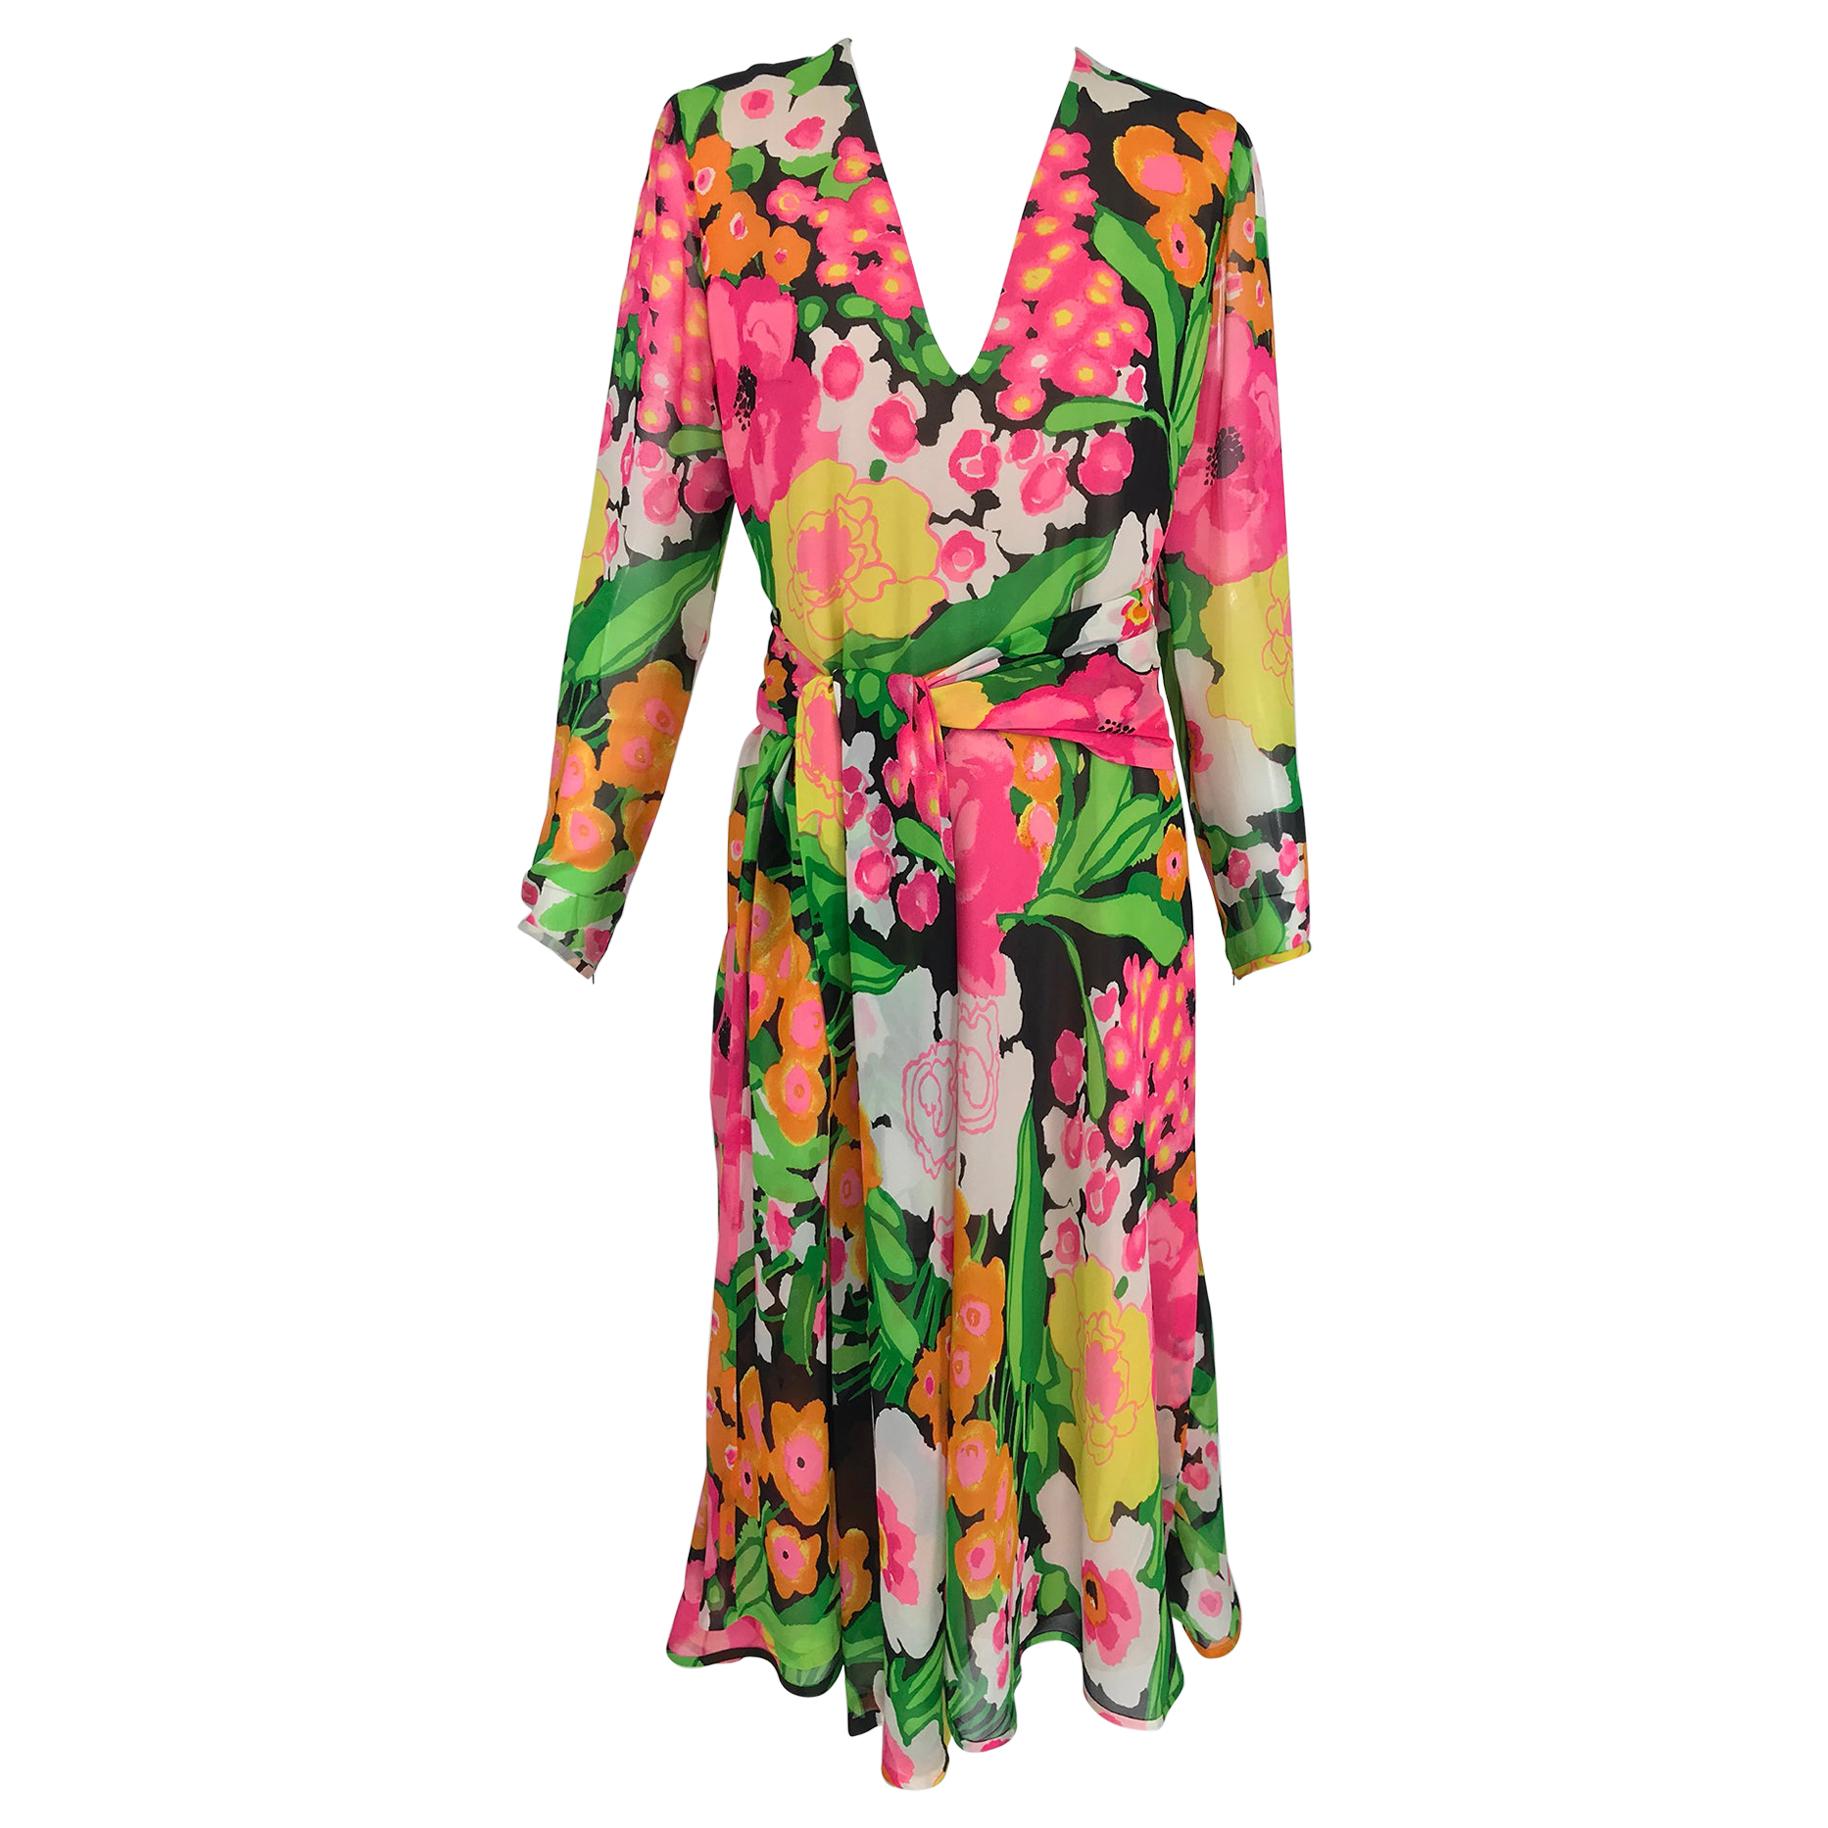 Pierre  Balmain Haute Couture Pieced Silk Vibrant Floral Dress and Sash